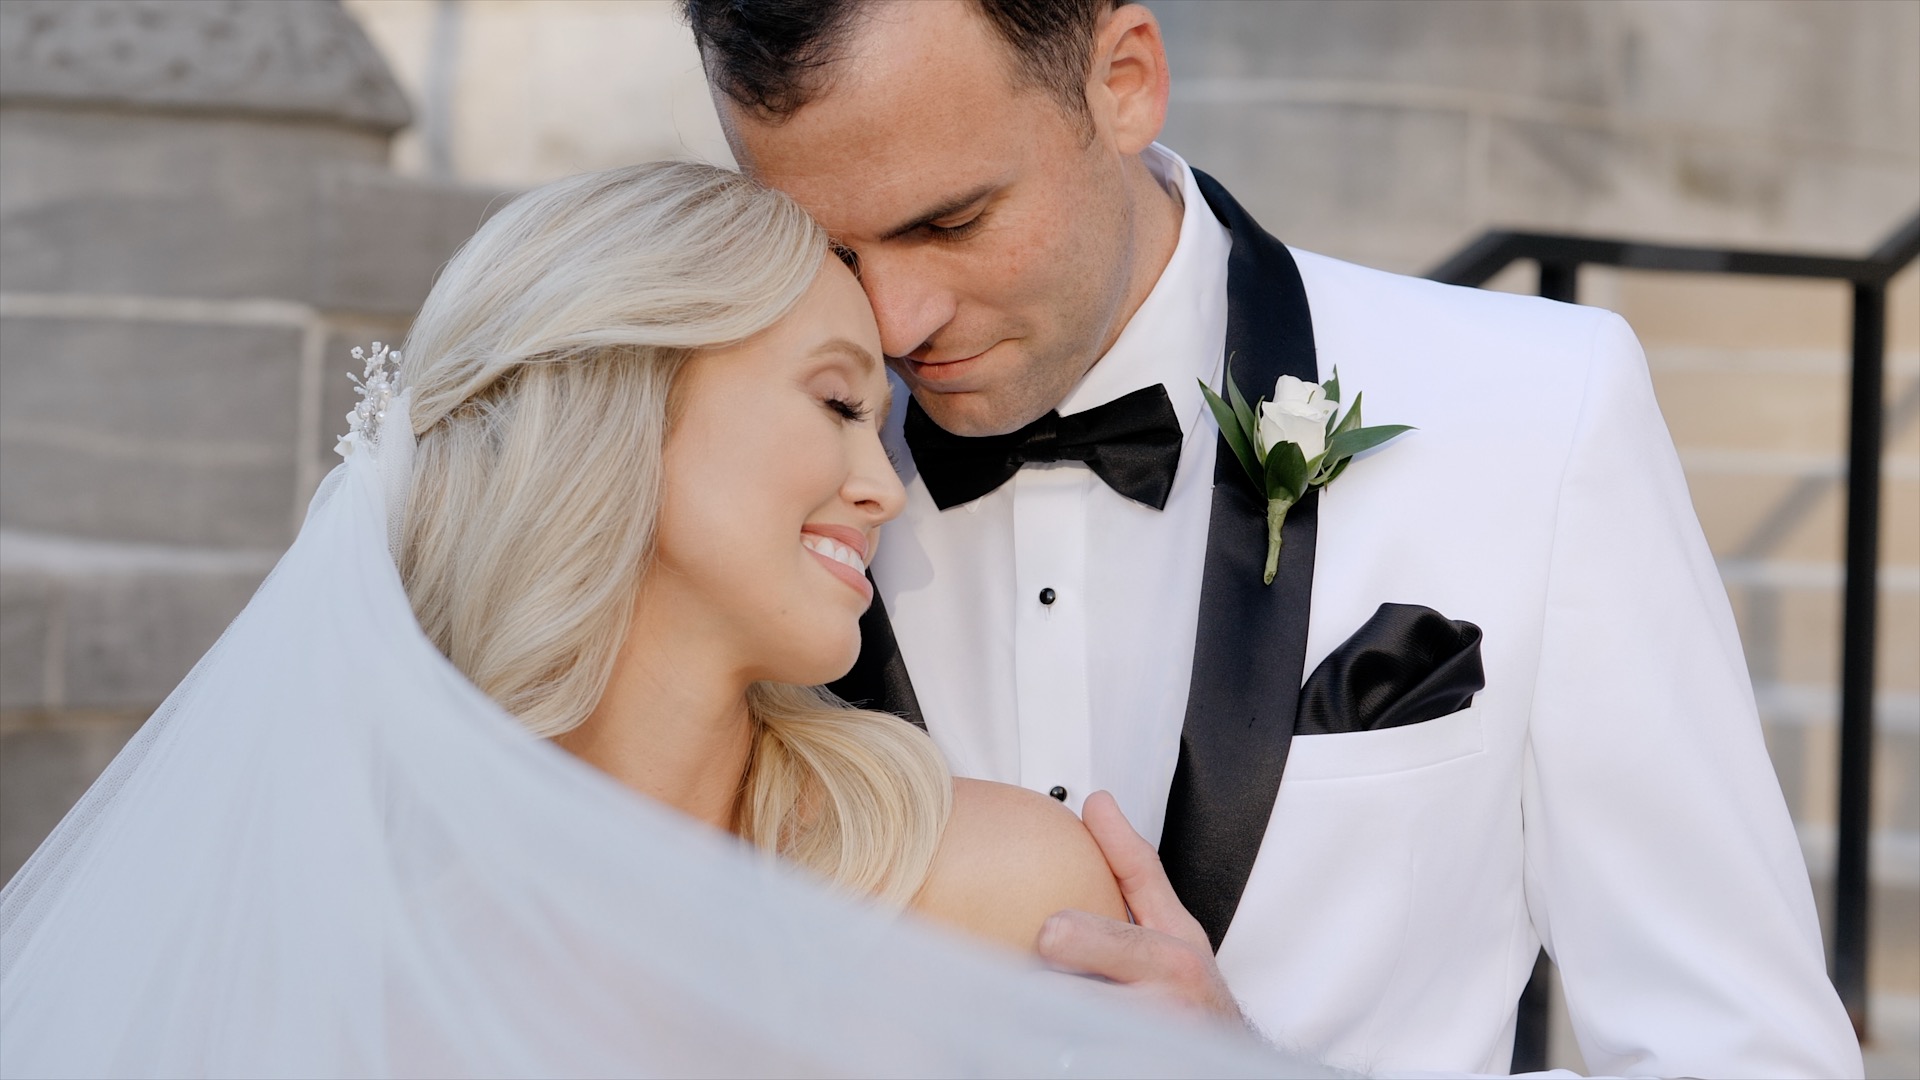 Lexington KY wedding videographer capturing a beautiful moment